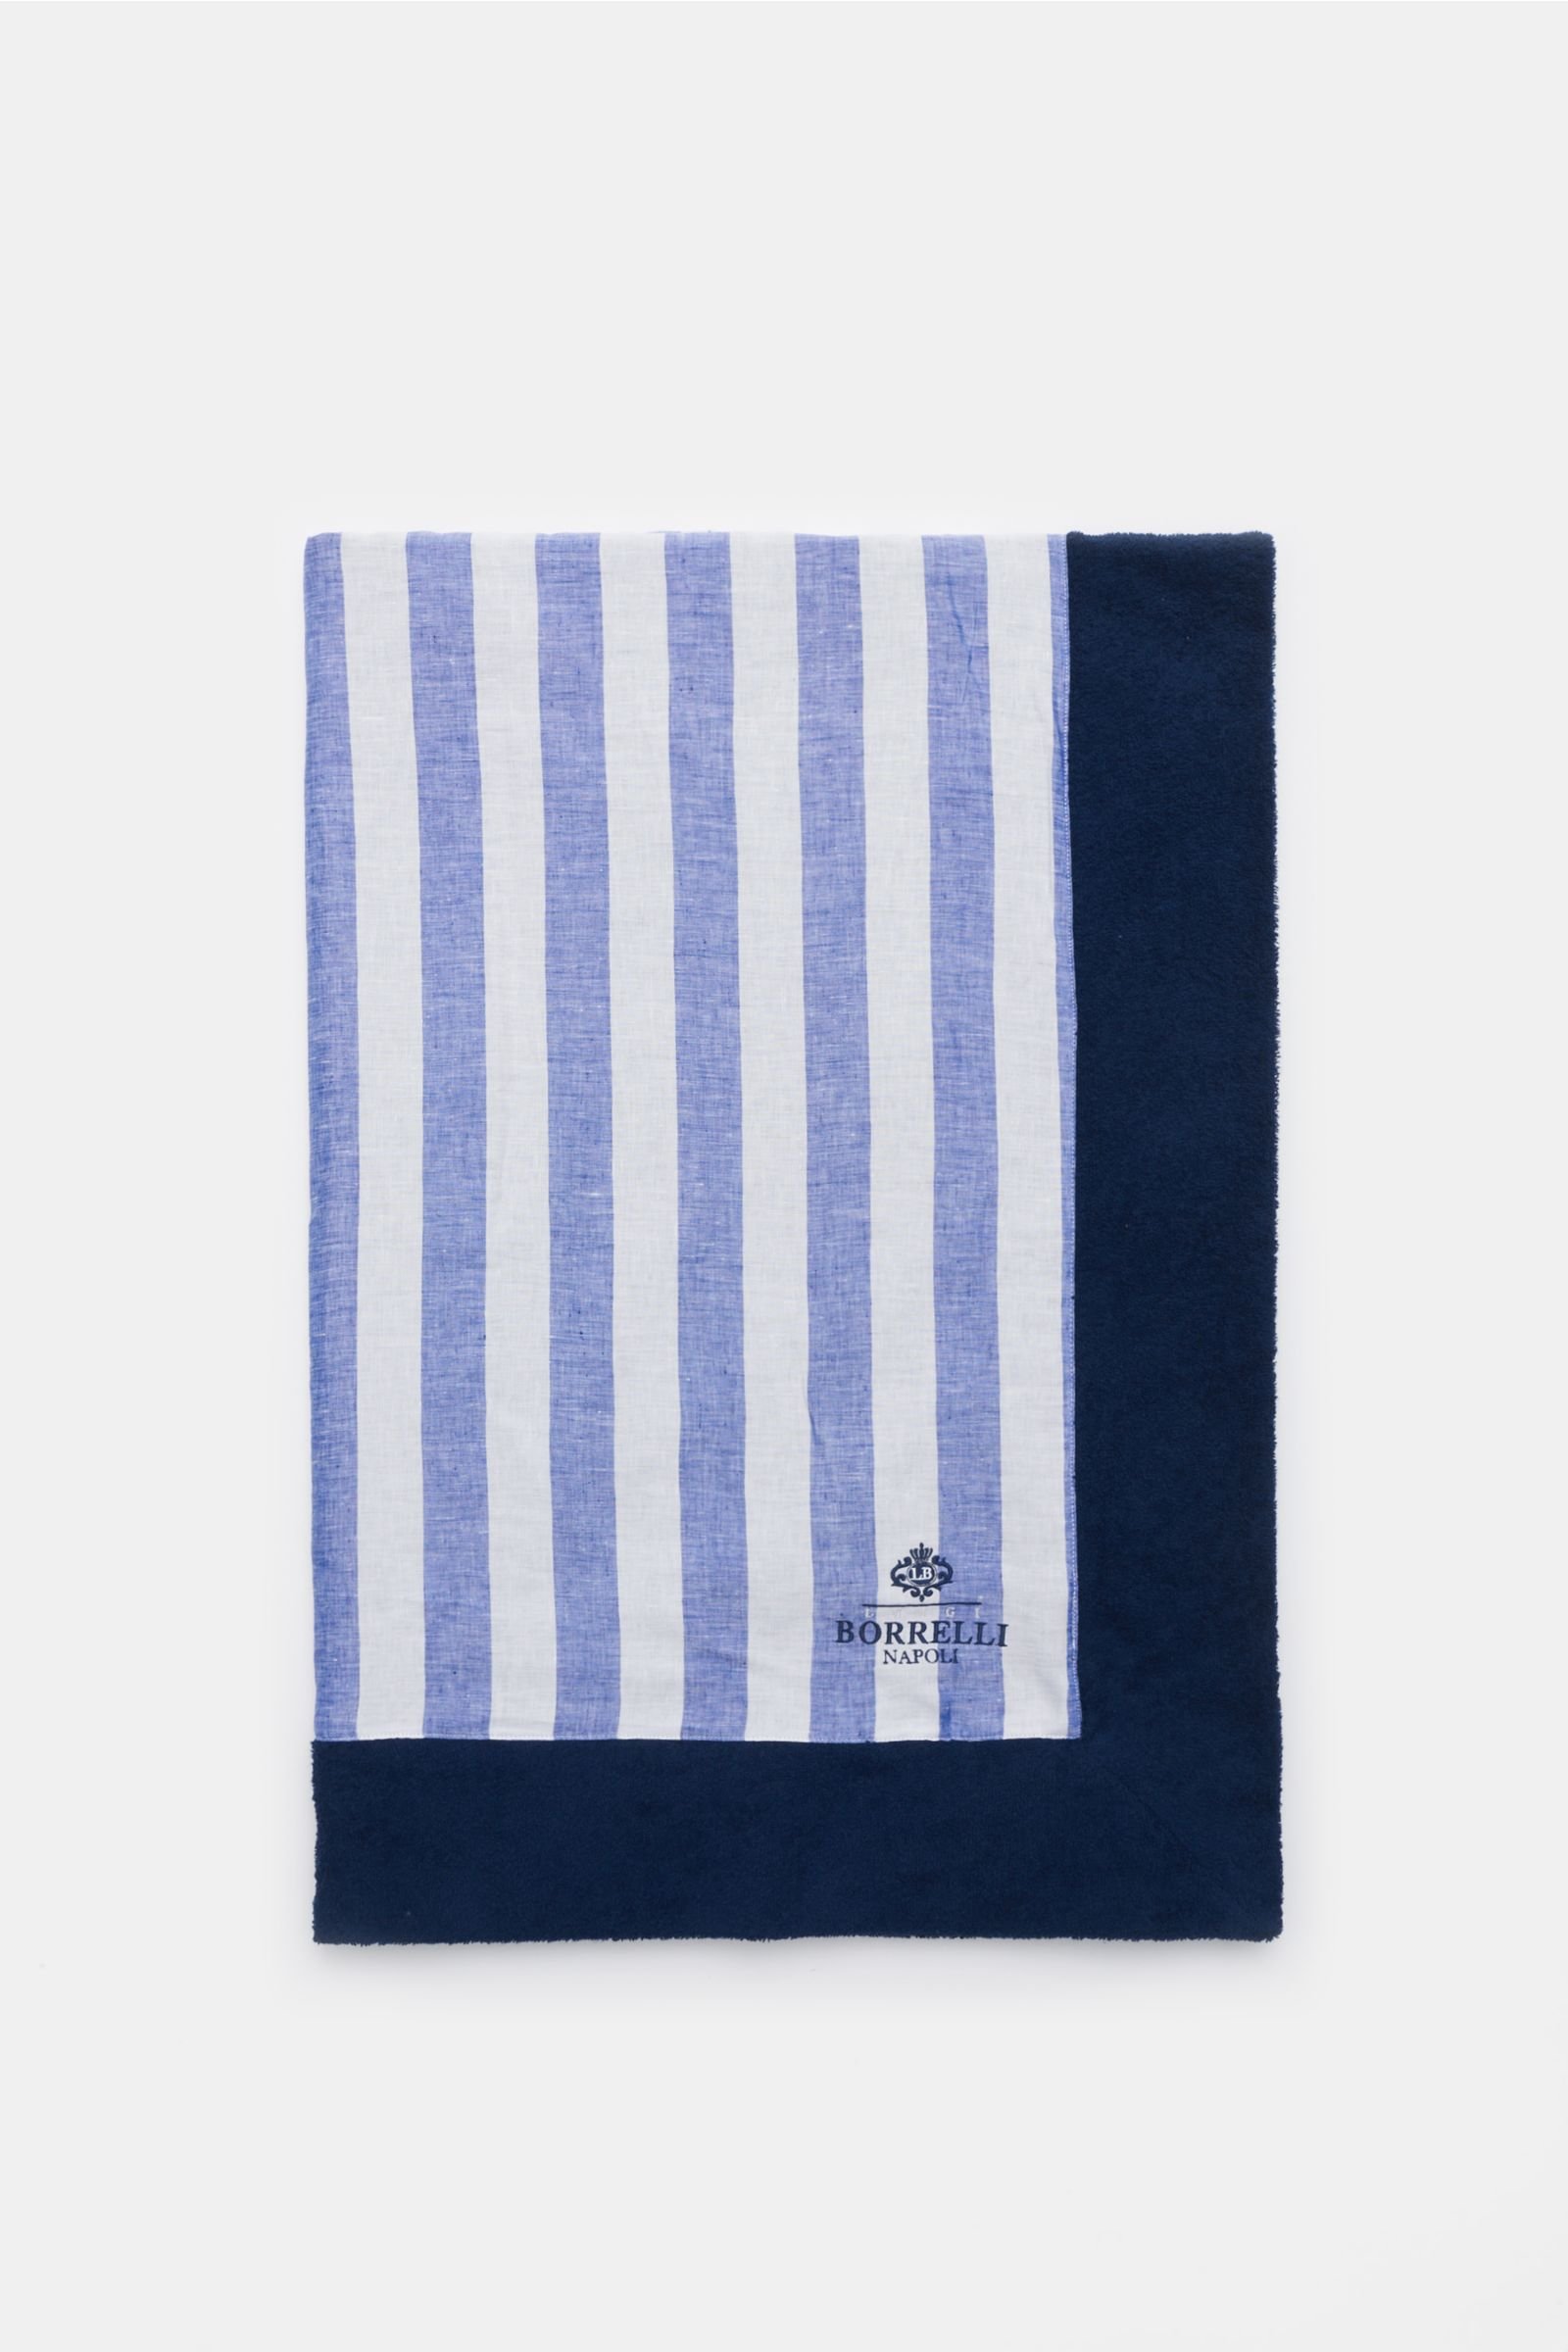 Bathing towel grey-blue/white striped